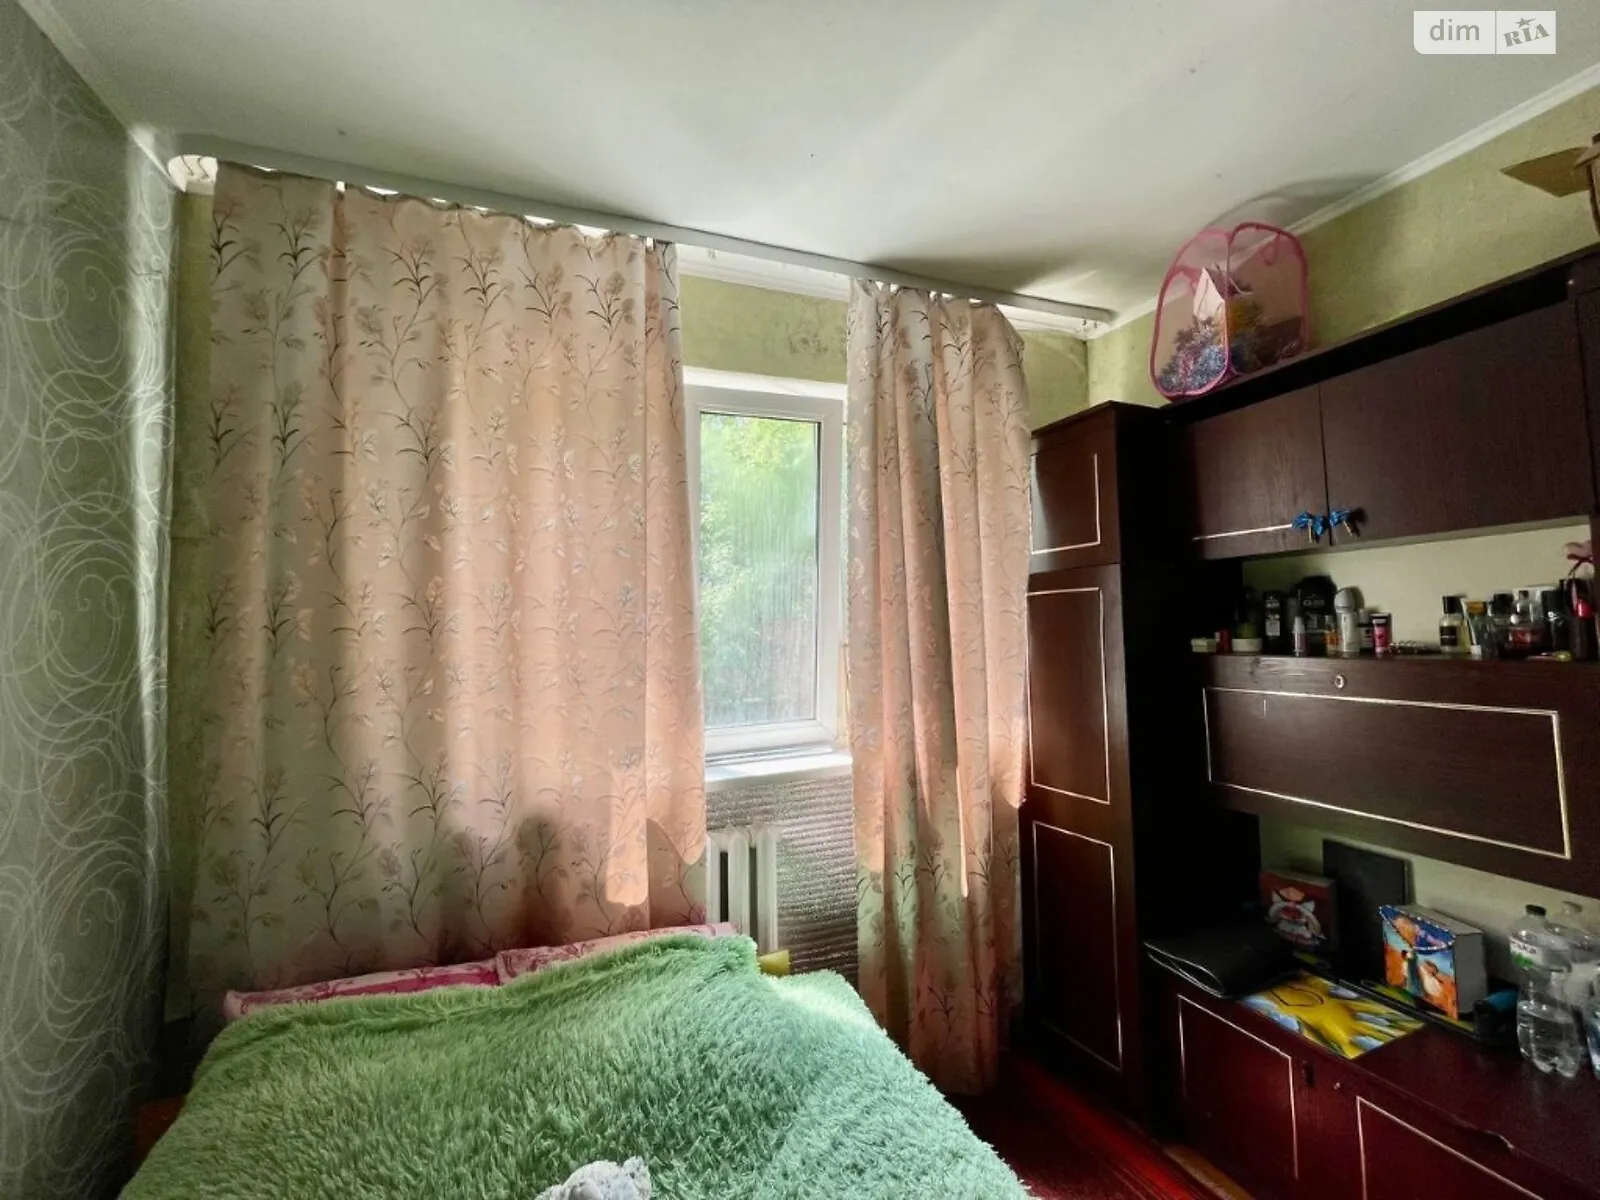 Продается комната 18 кв. м в Виннице, цена: 12997 $ - фото 1